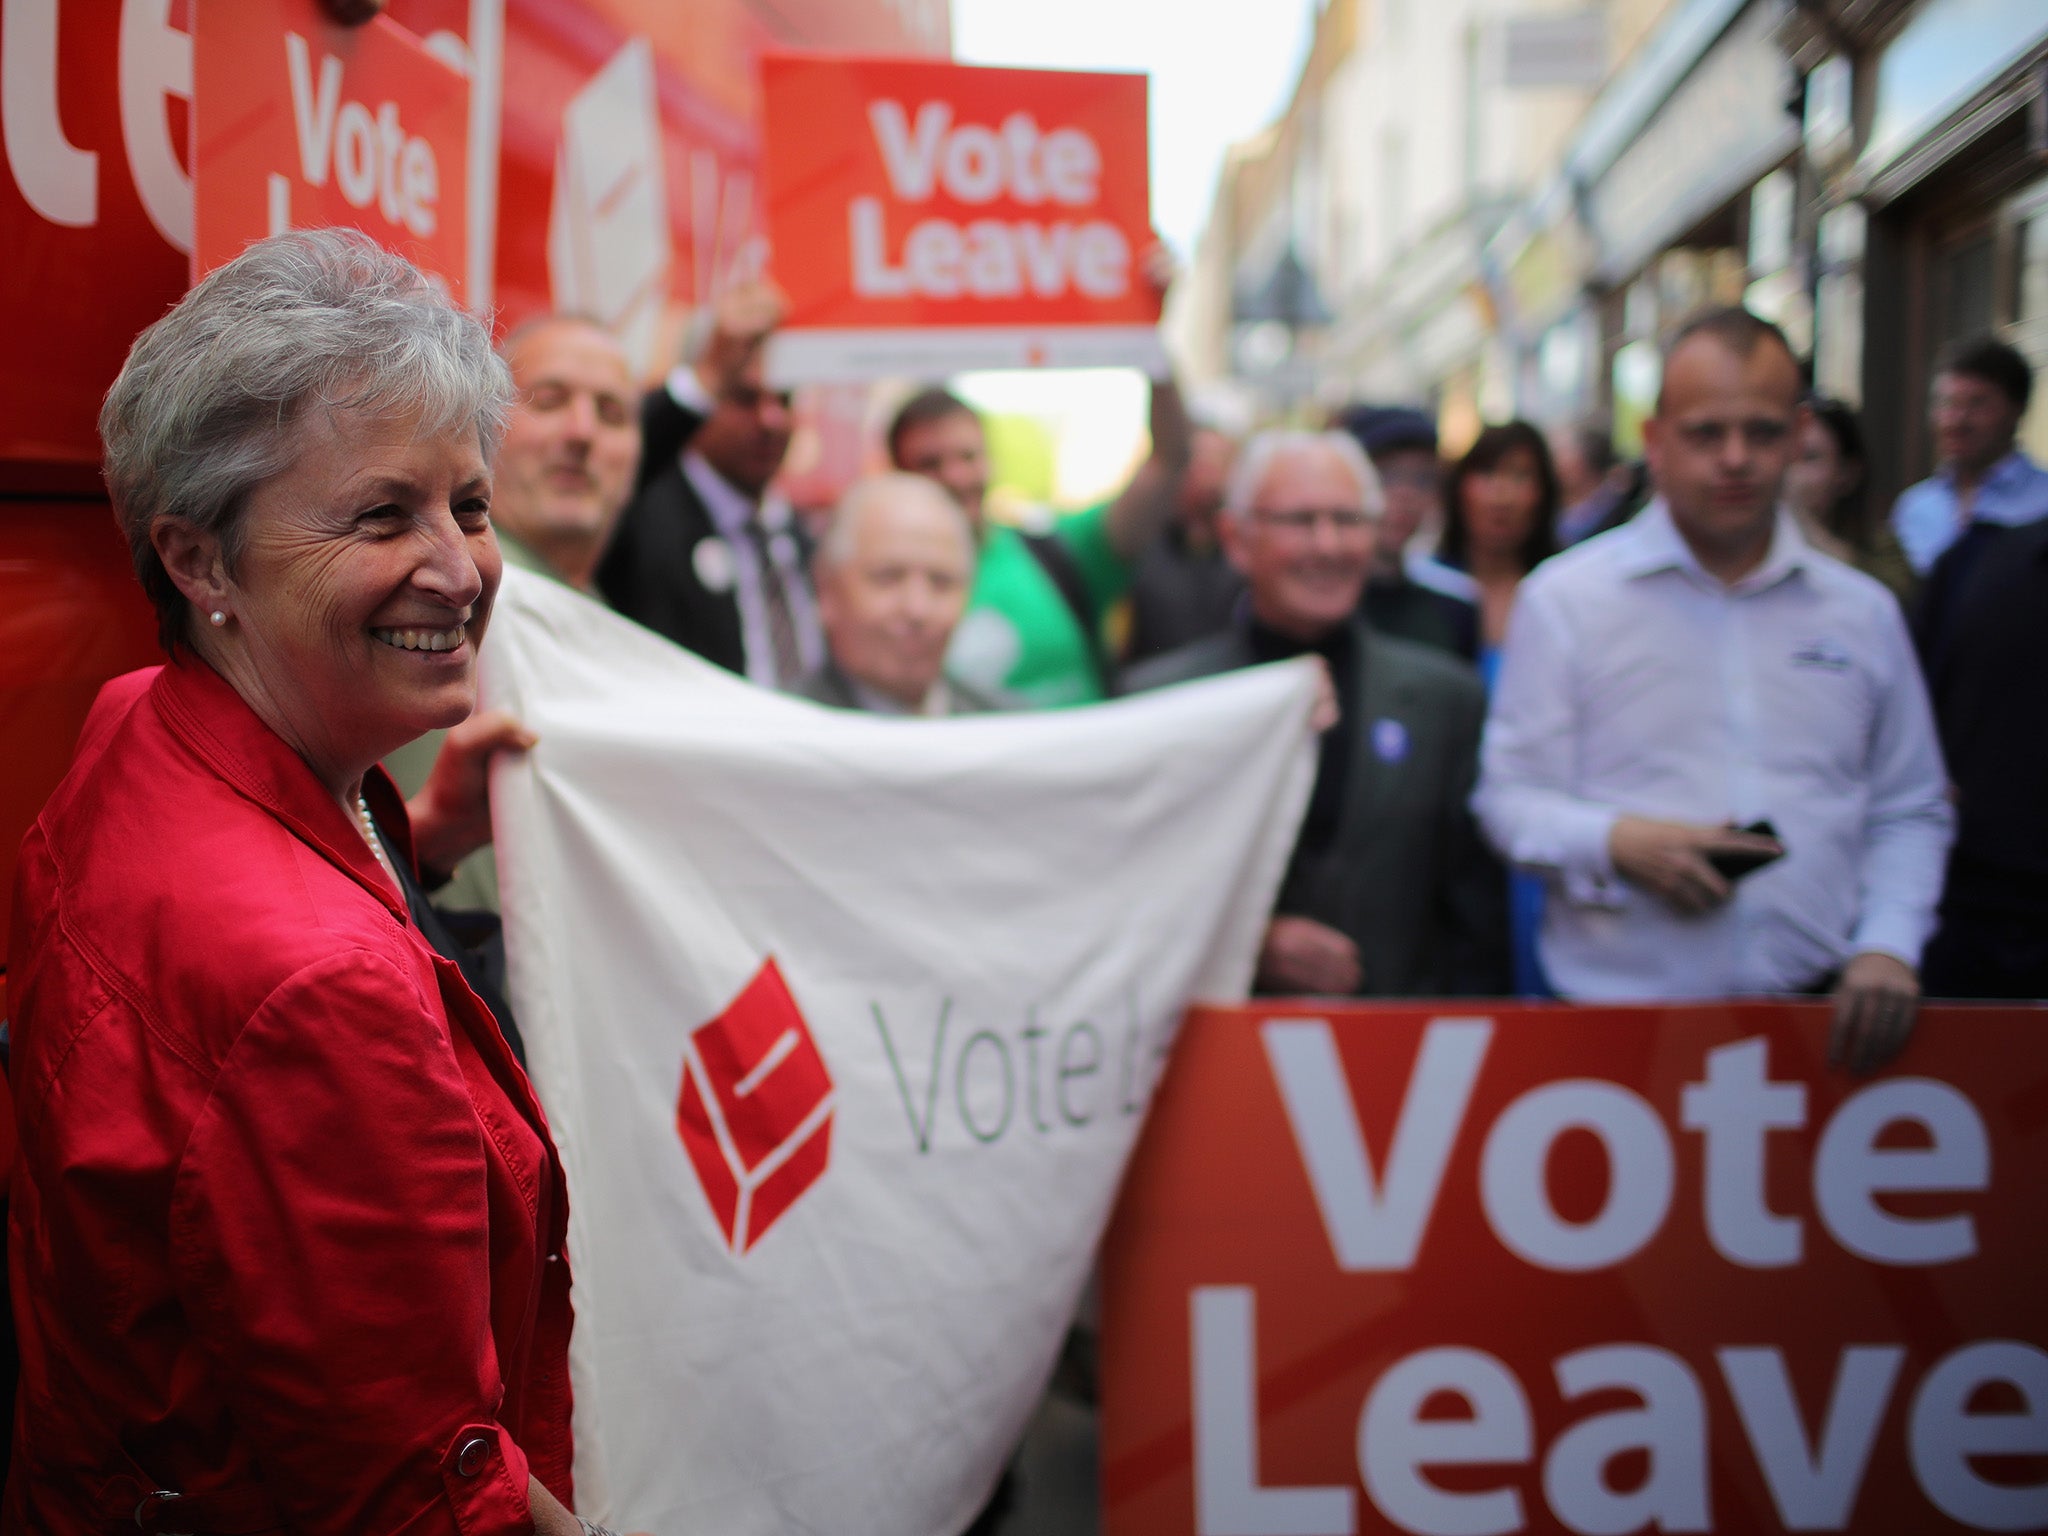 Gisela Stuart was the most high-profile Labour MP on the Vote Leave campaign